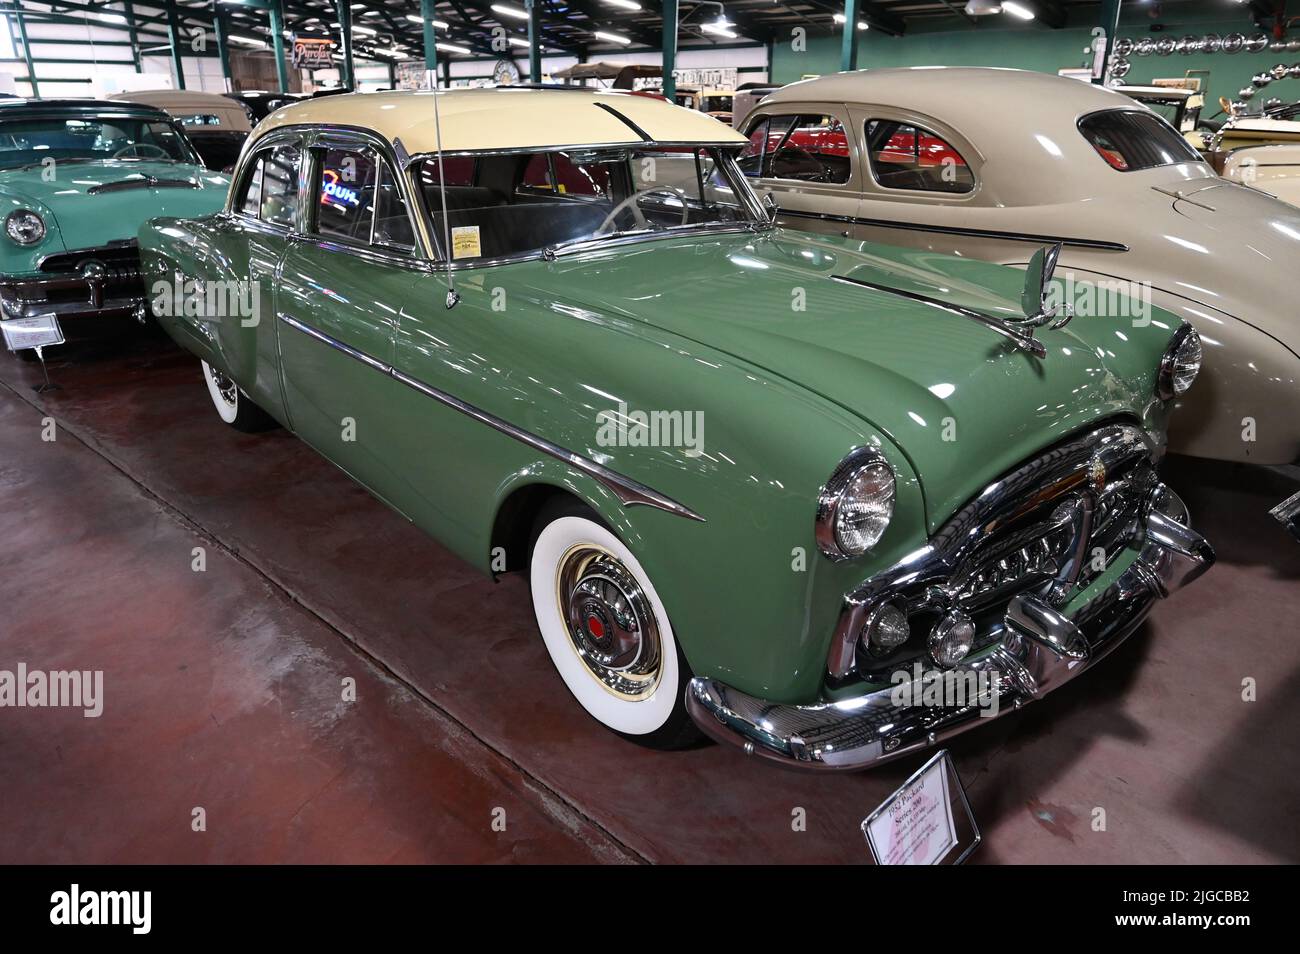 American classic car. Stock Photo